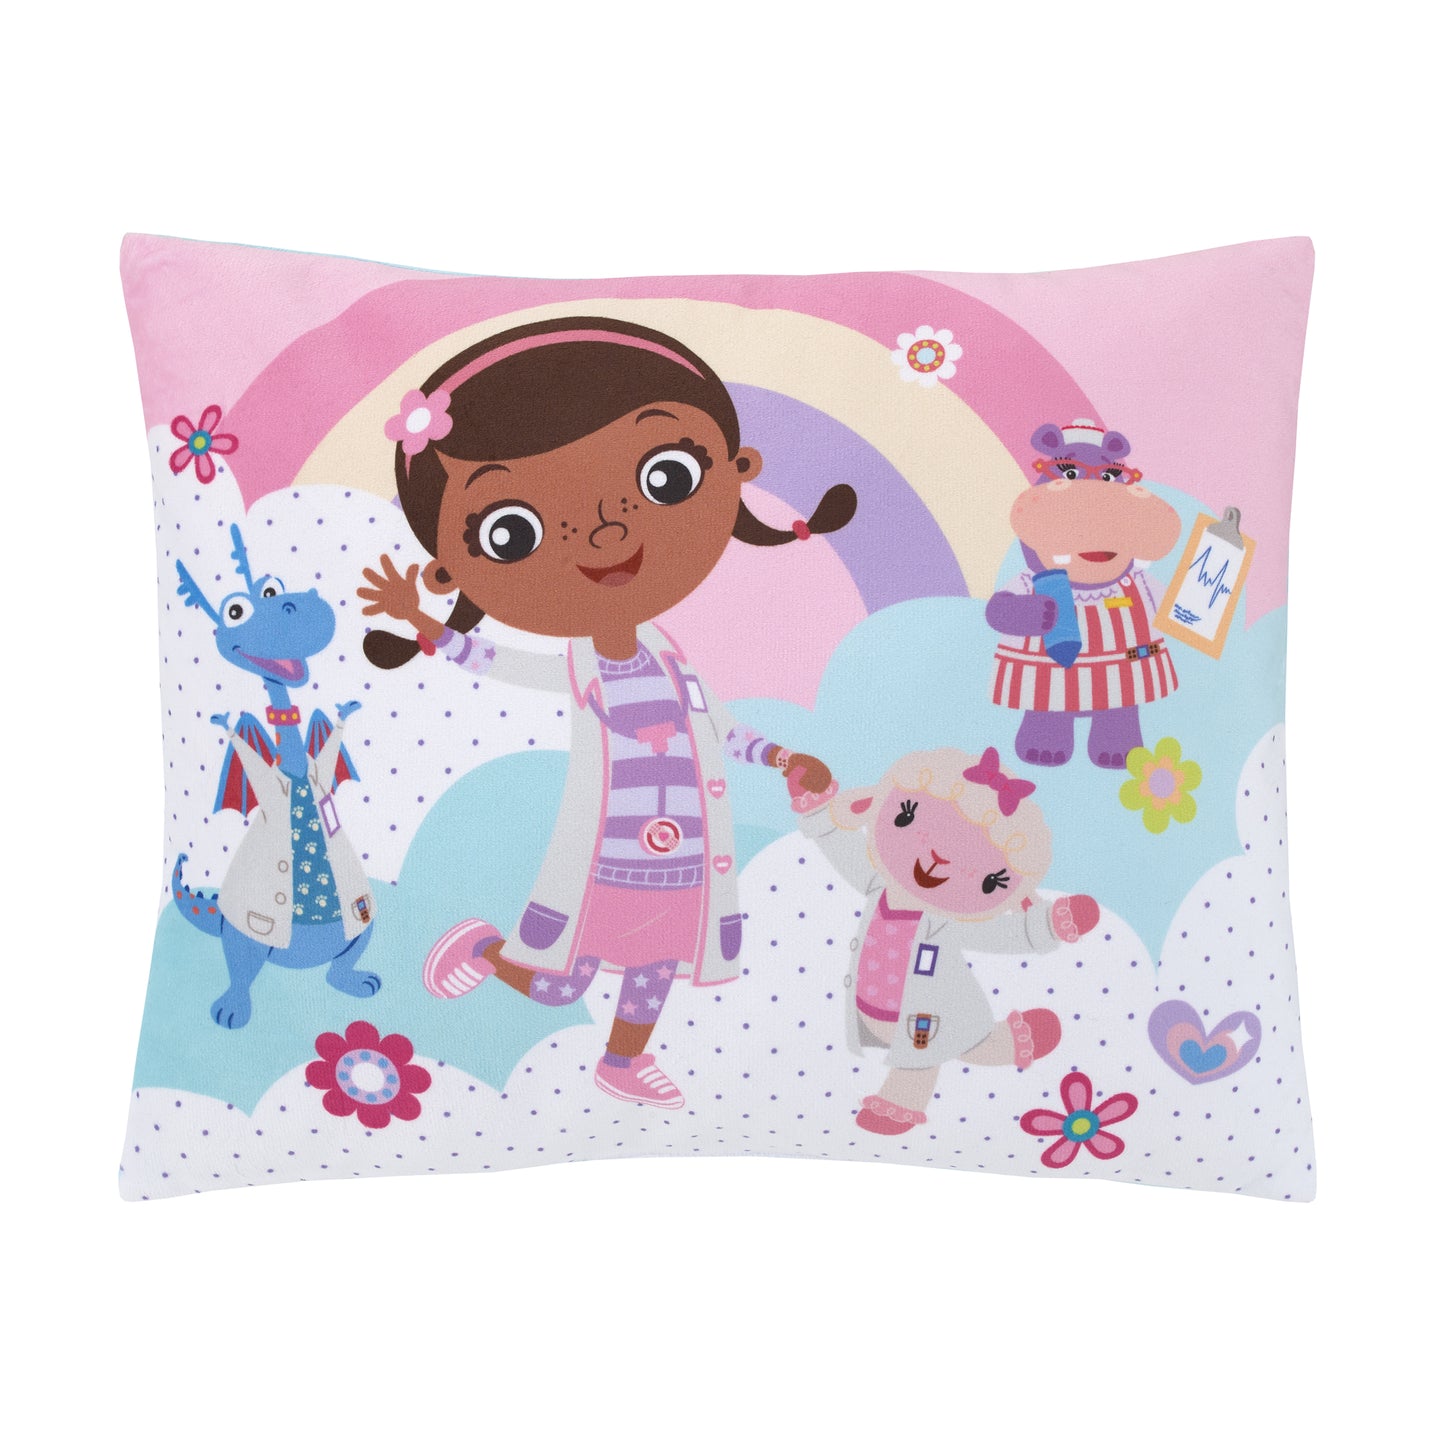 Disney Doc McStuffins Cuddle Team Purple, Pink and Aqua Rainbows and Clouds Super Soft Toddler Pillow